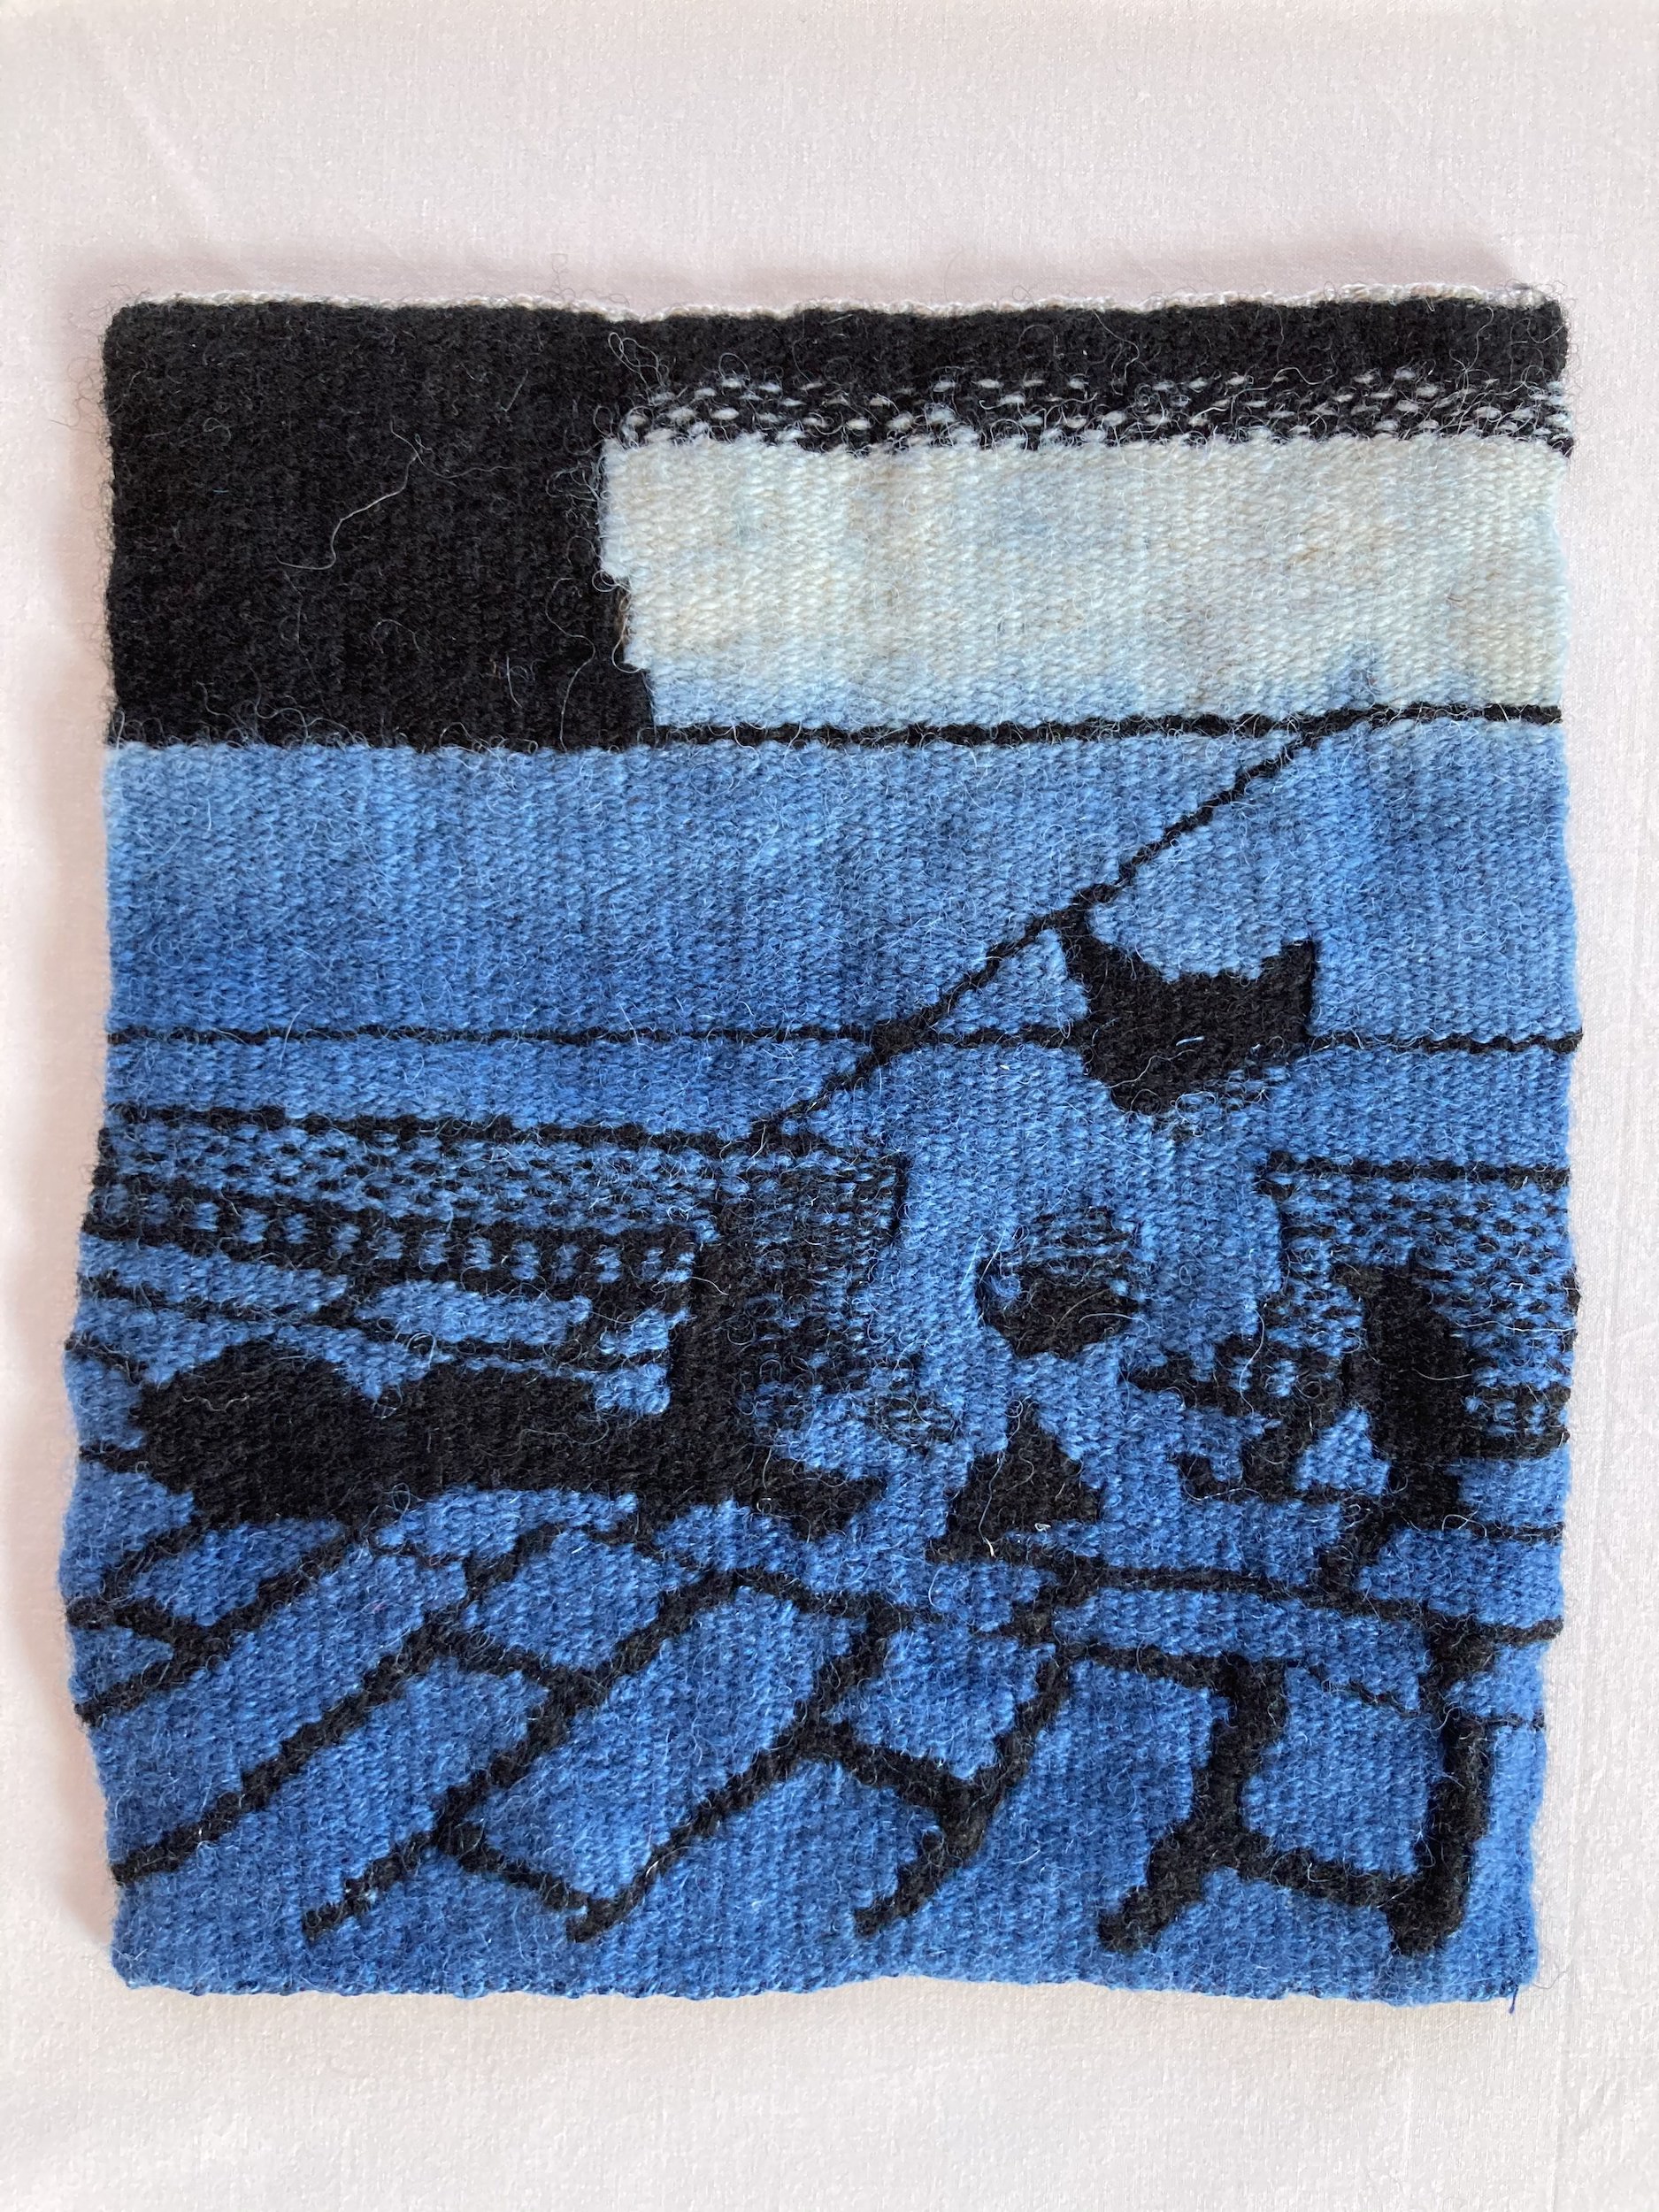 Unlikely Friends, wool tapestry by Mary M. Jones